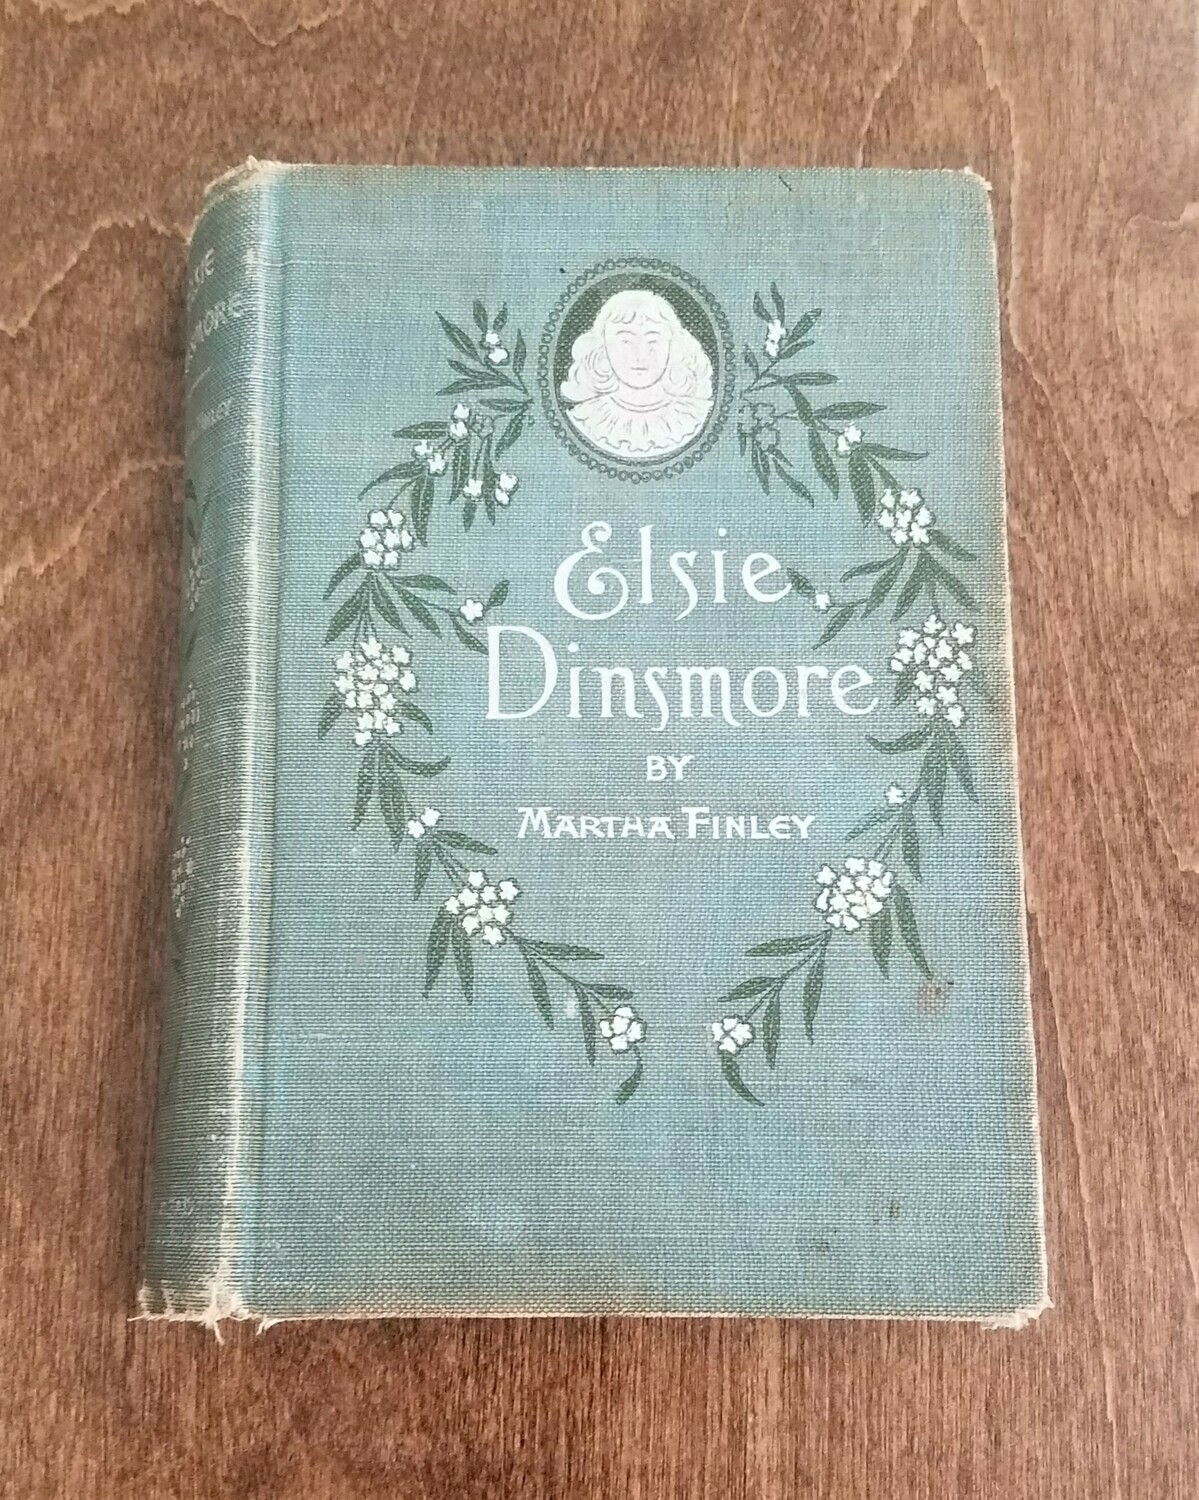 Elsie Dinsmore by Martha Finley